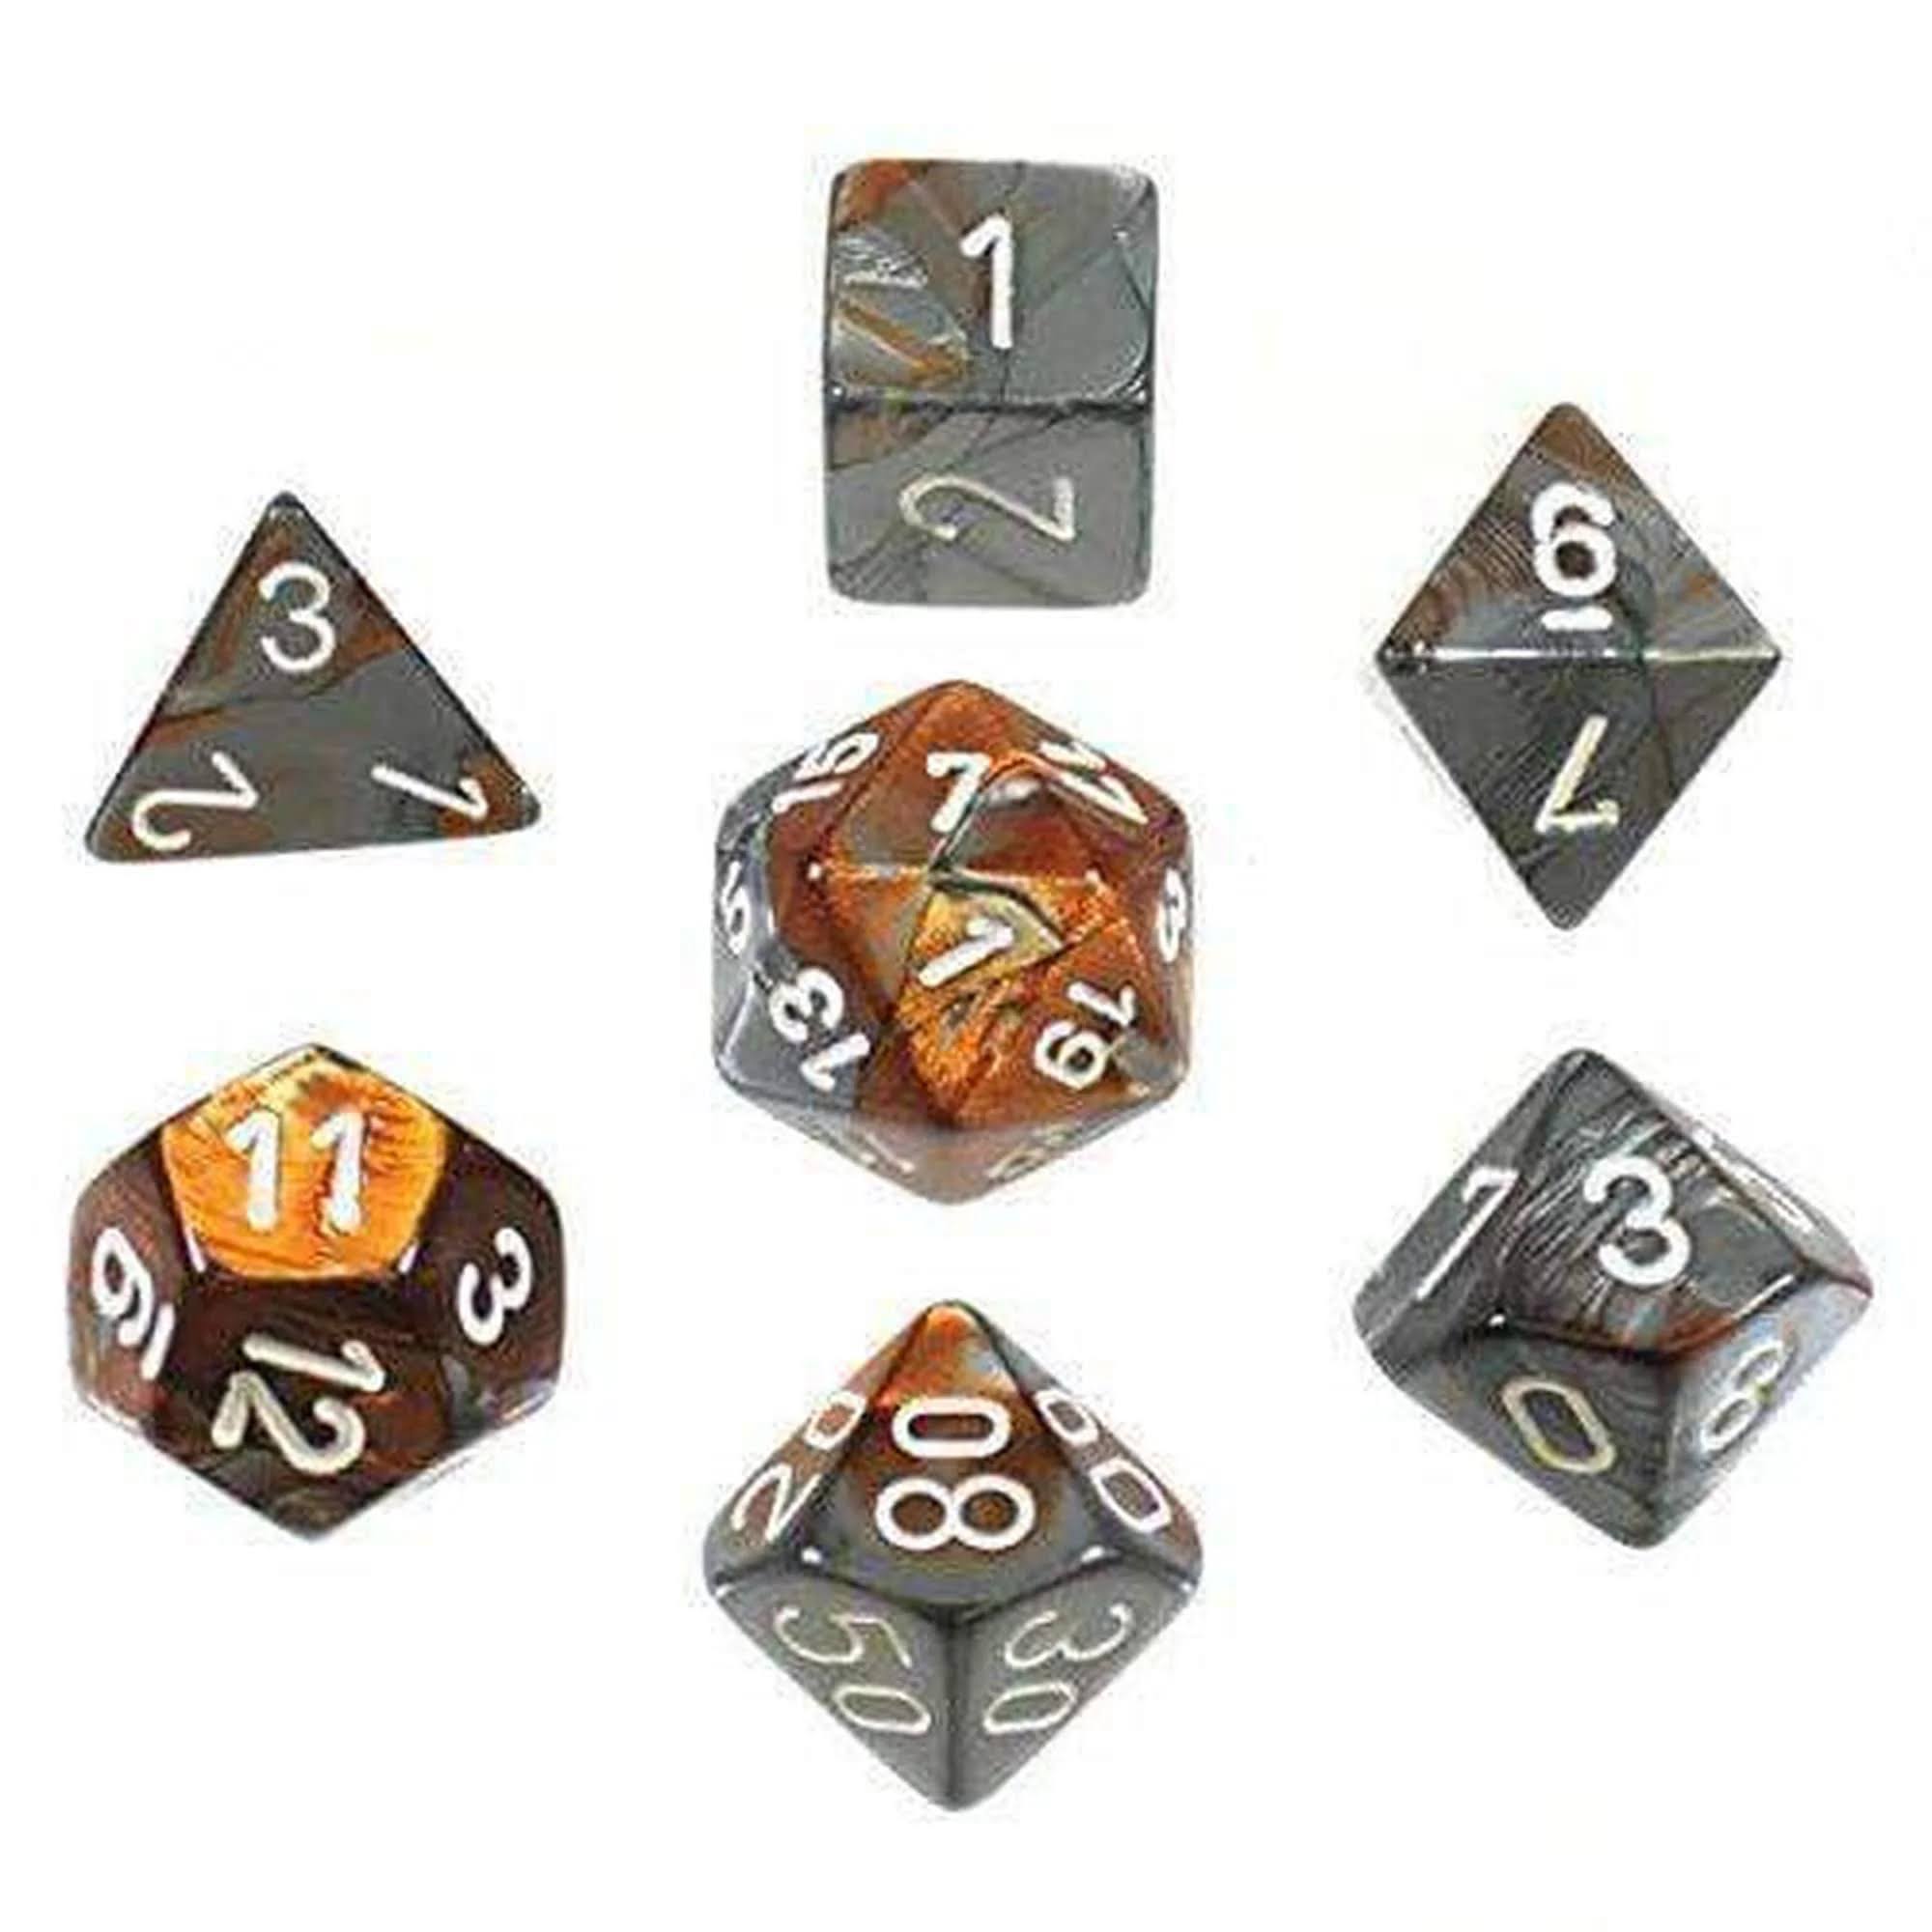 Chessex Dice Gemini Copper-Steel/White 7-Die Set